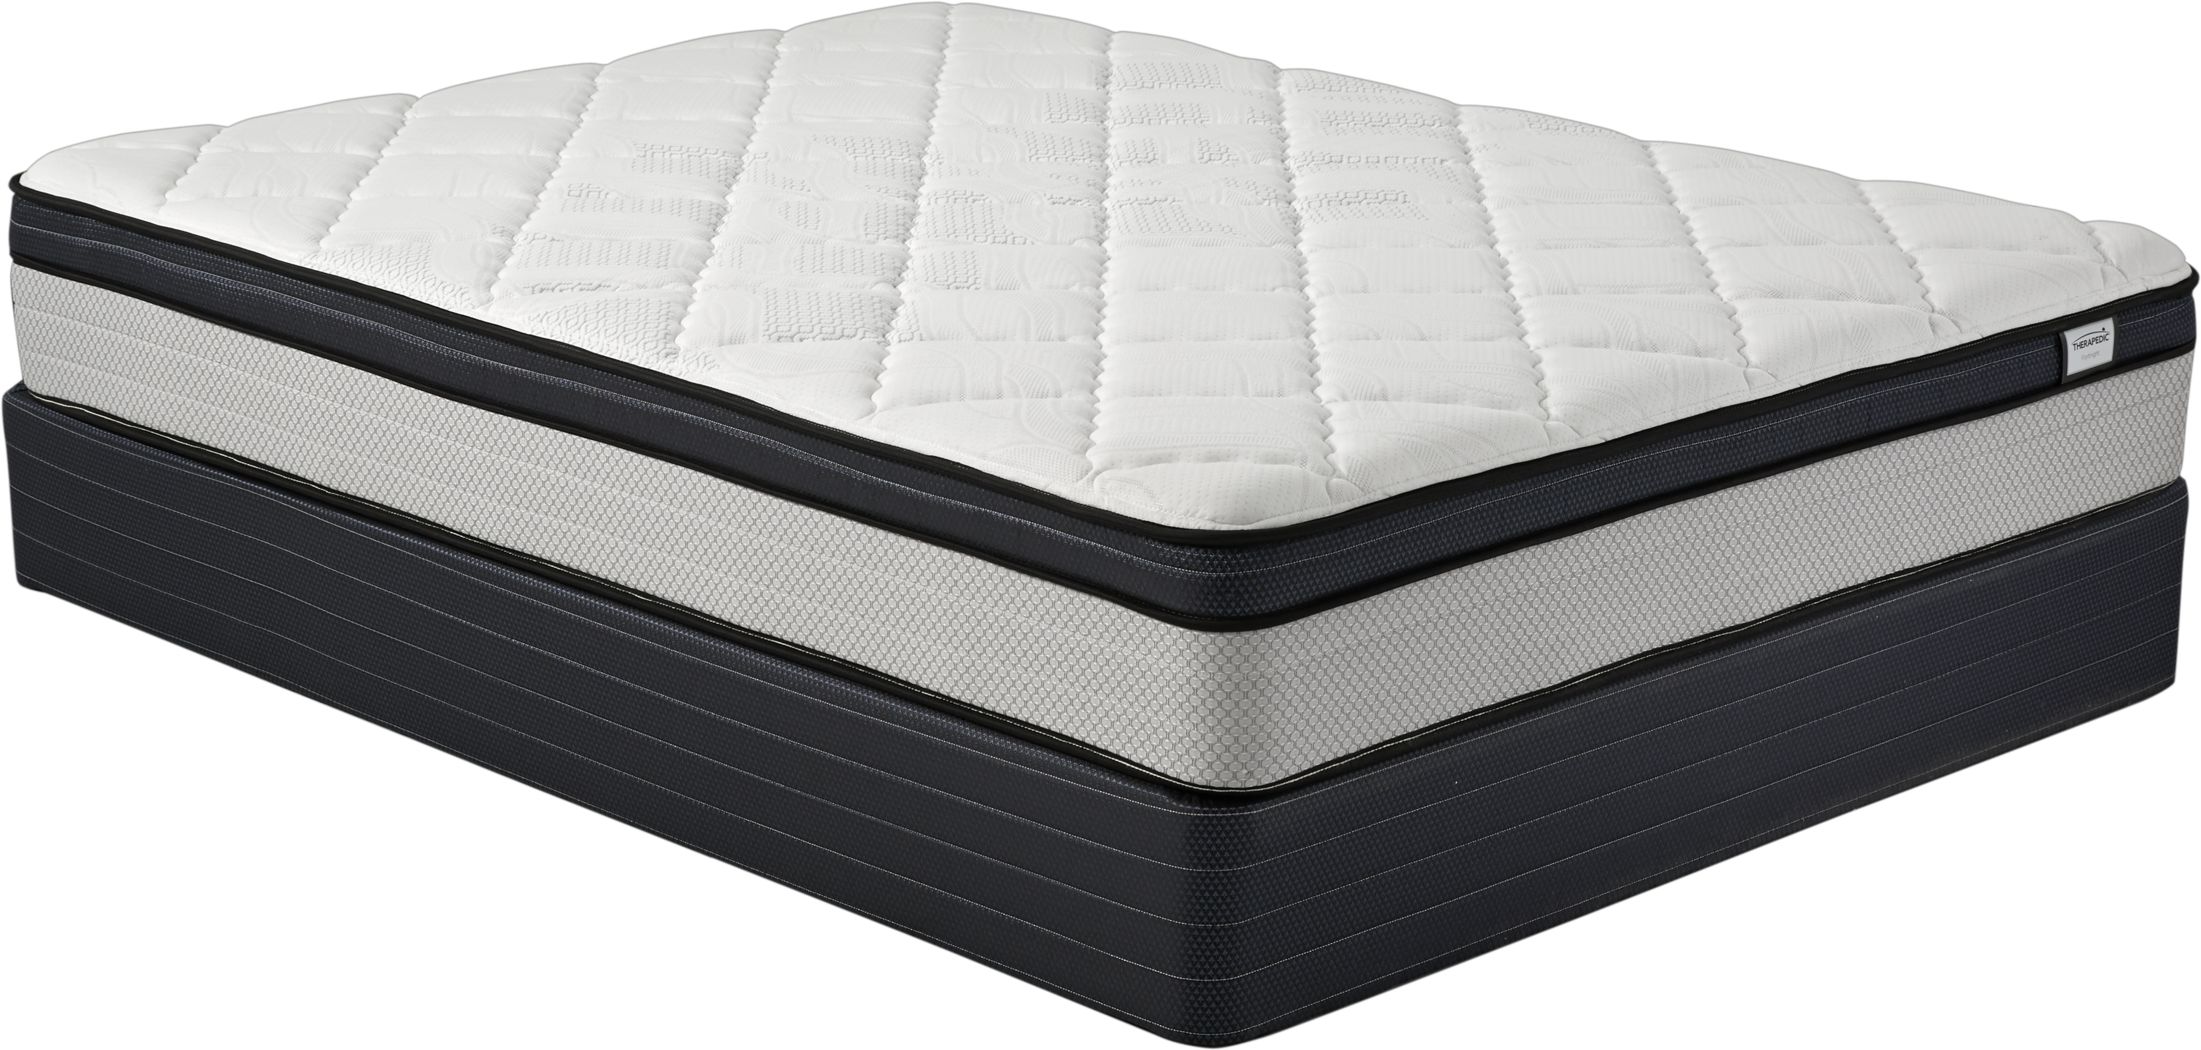 therapedic fortnight low profile queen mattress set